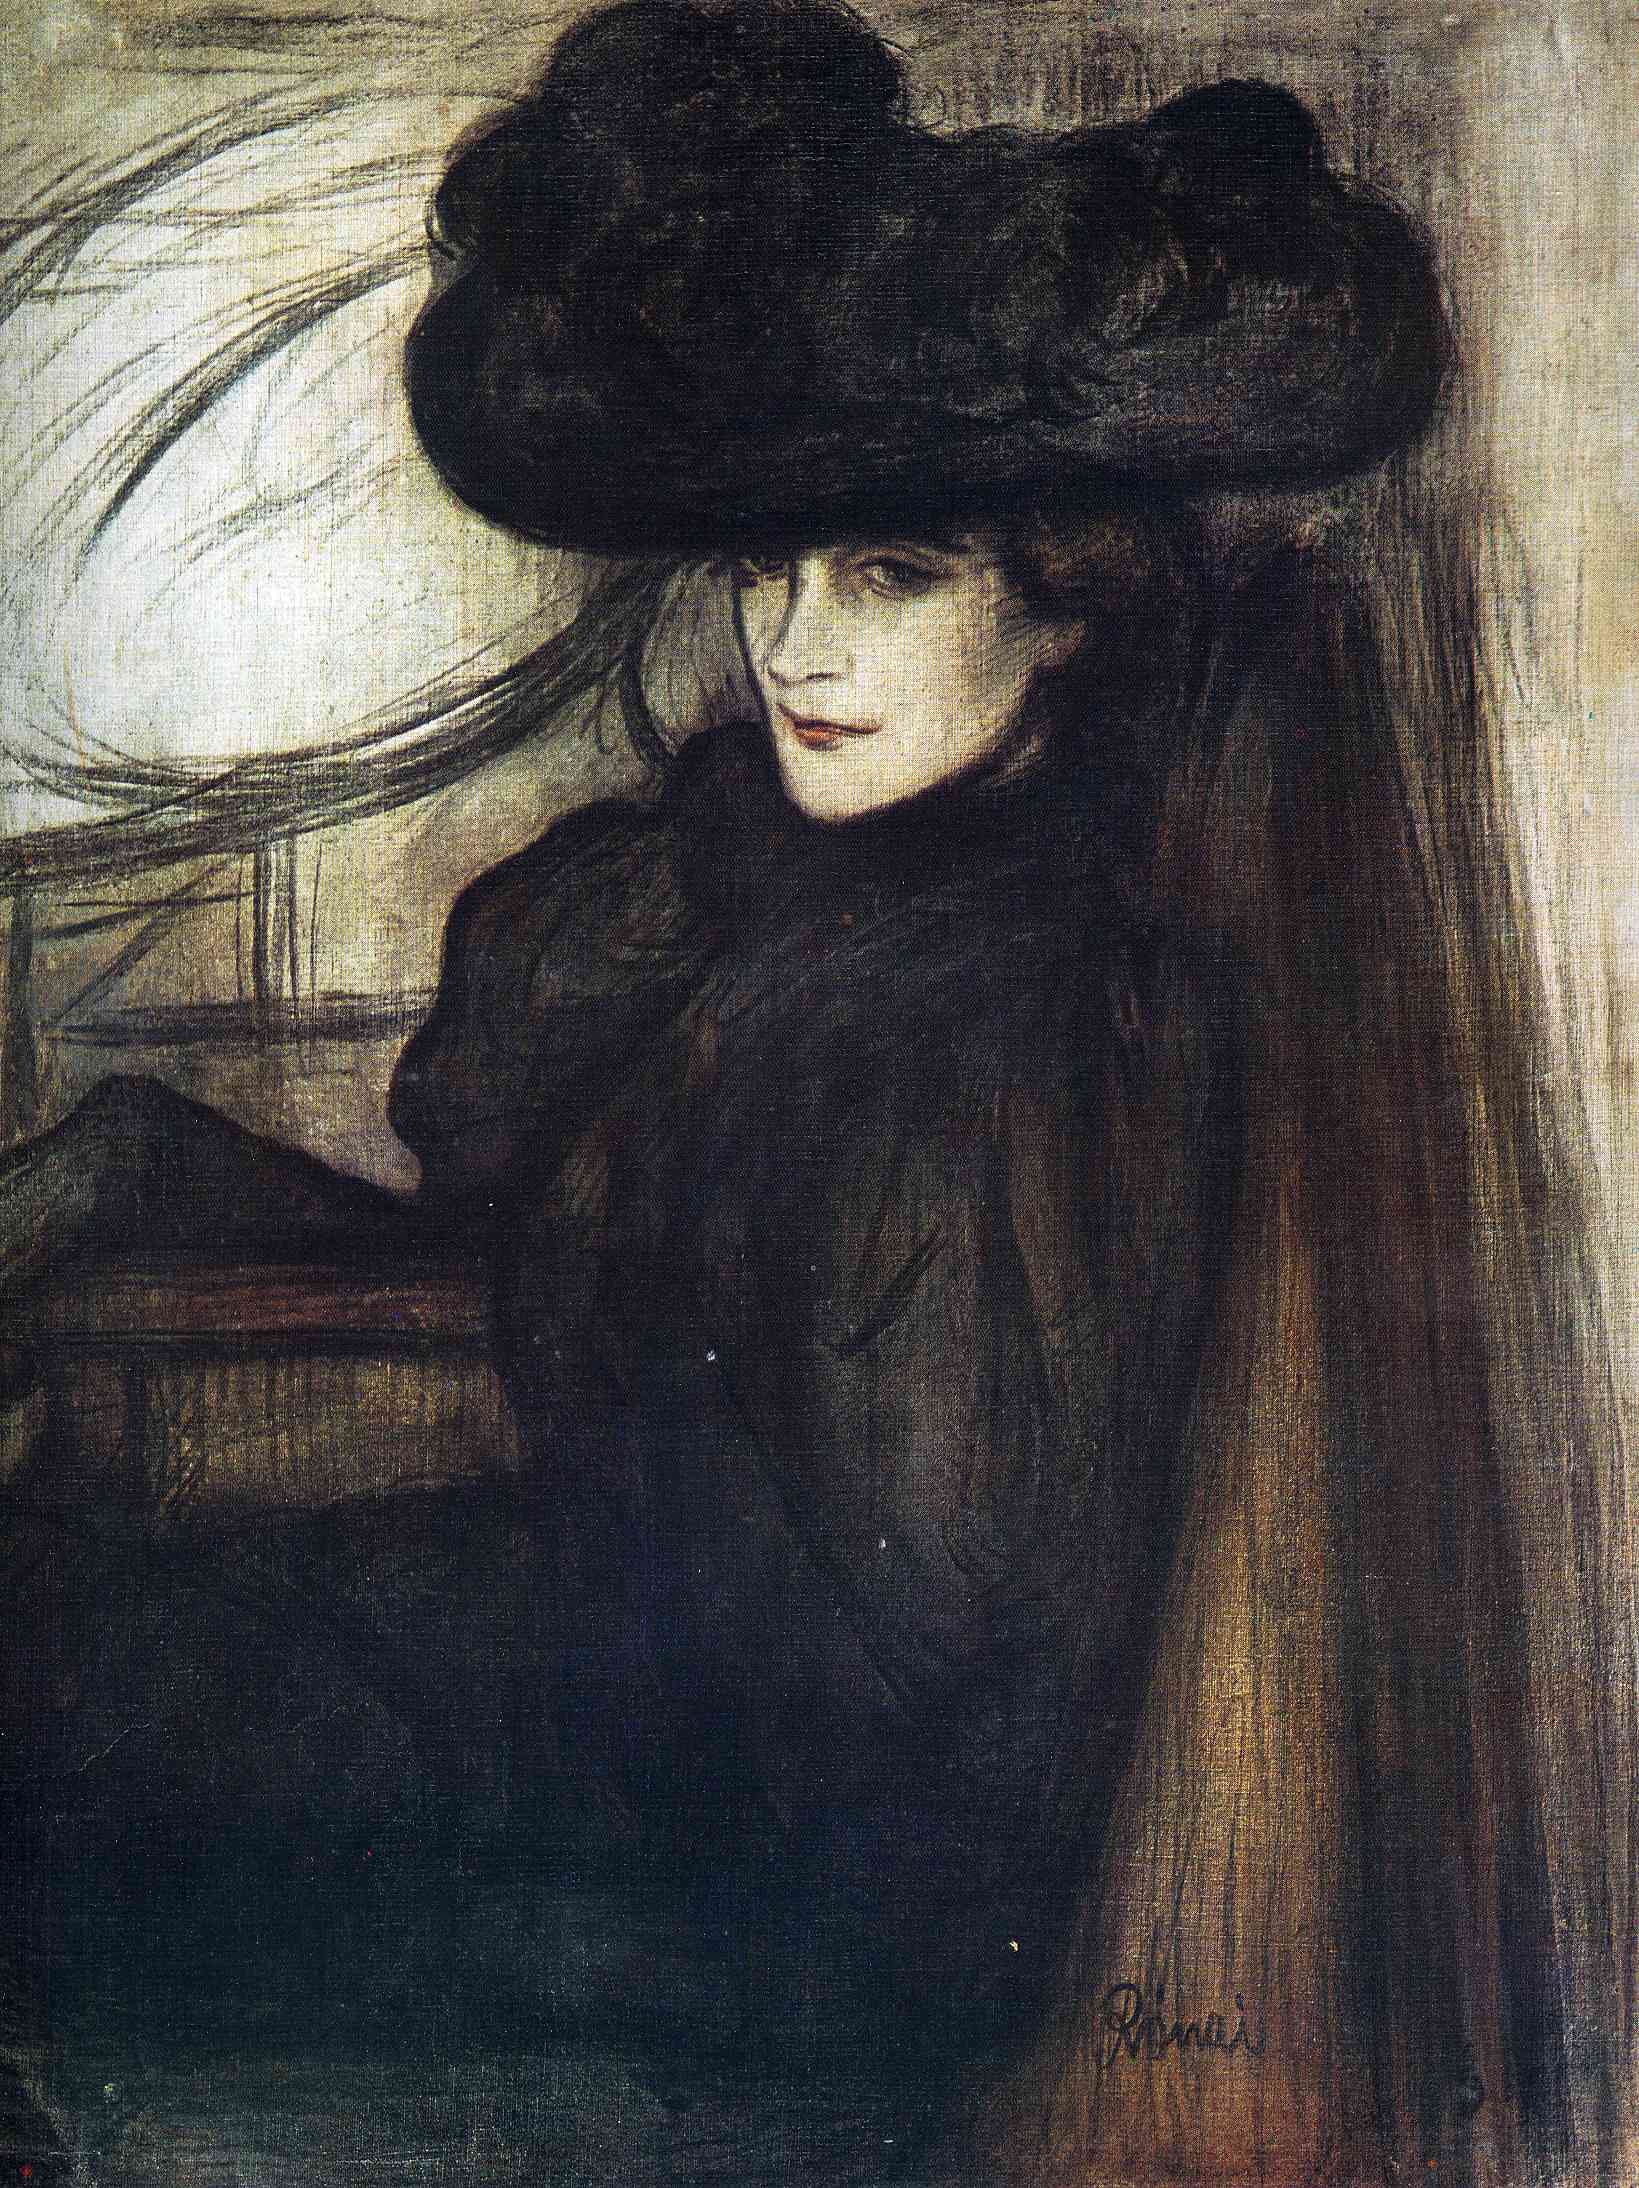 Lady with Black Veil by József Rippl-Rónai - 1896 - 99 x 80 cm Magyar Nemzeti Galéria, Budapest